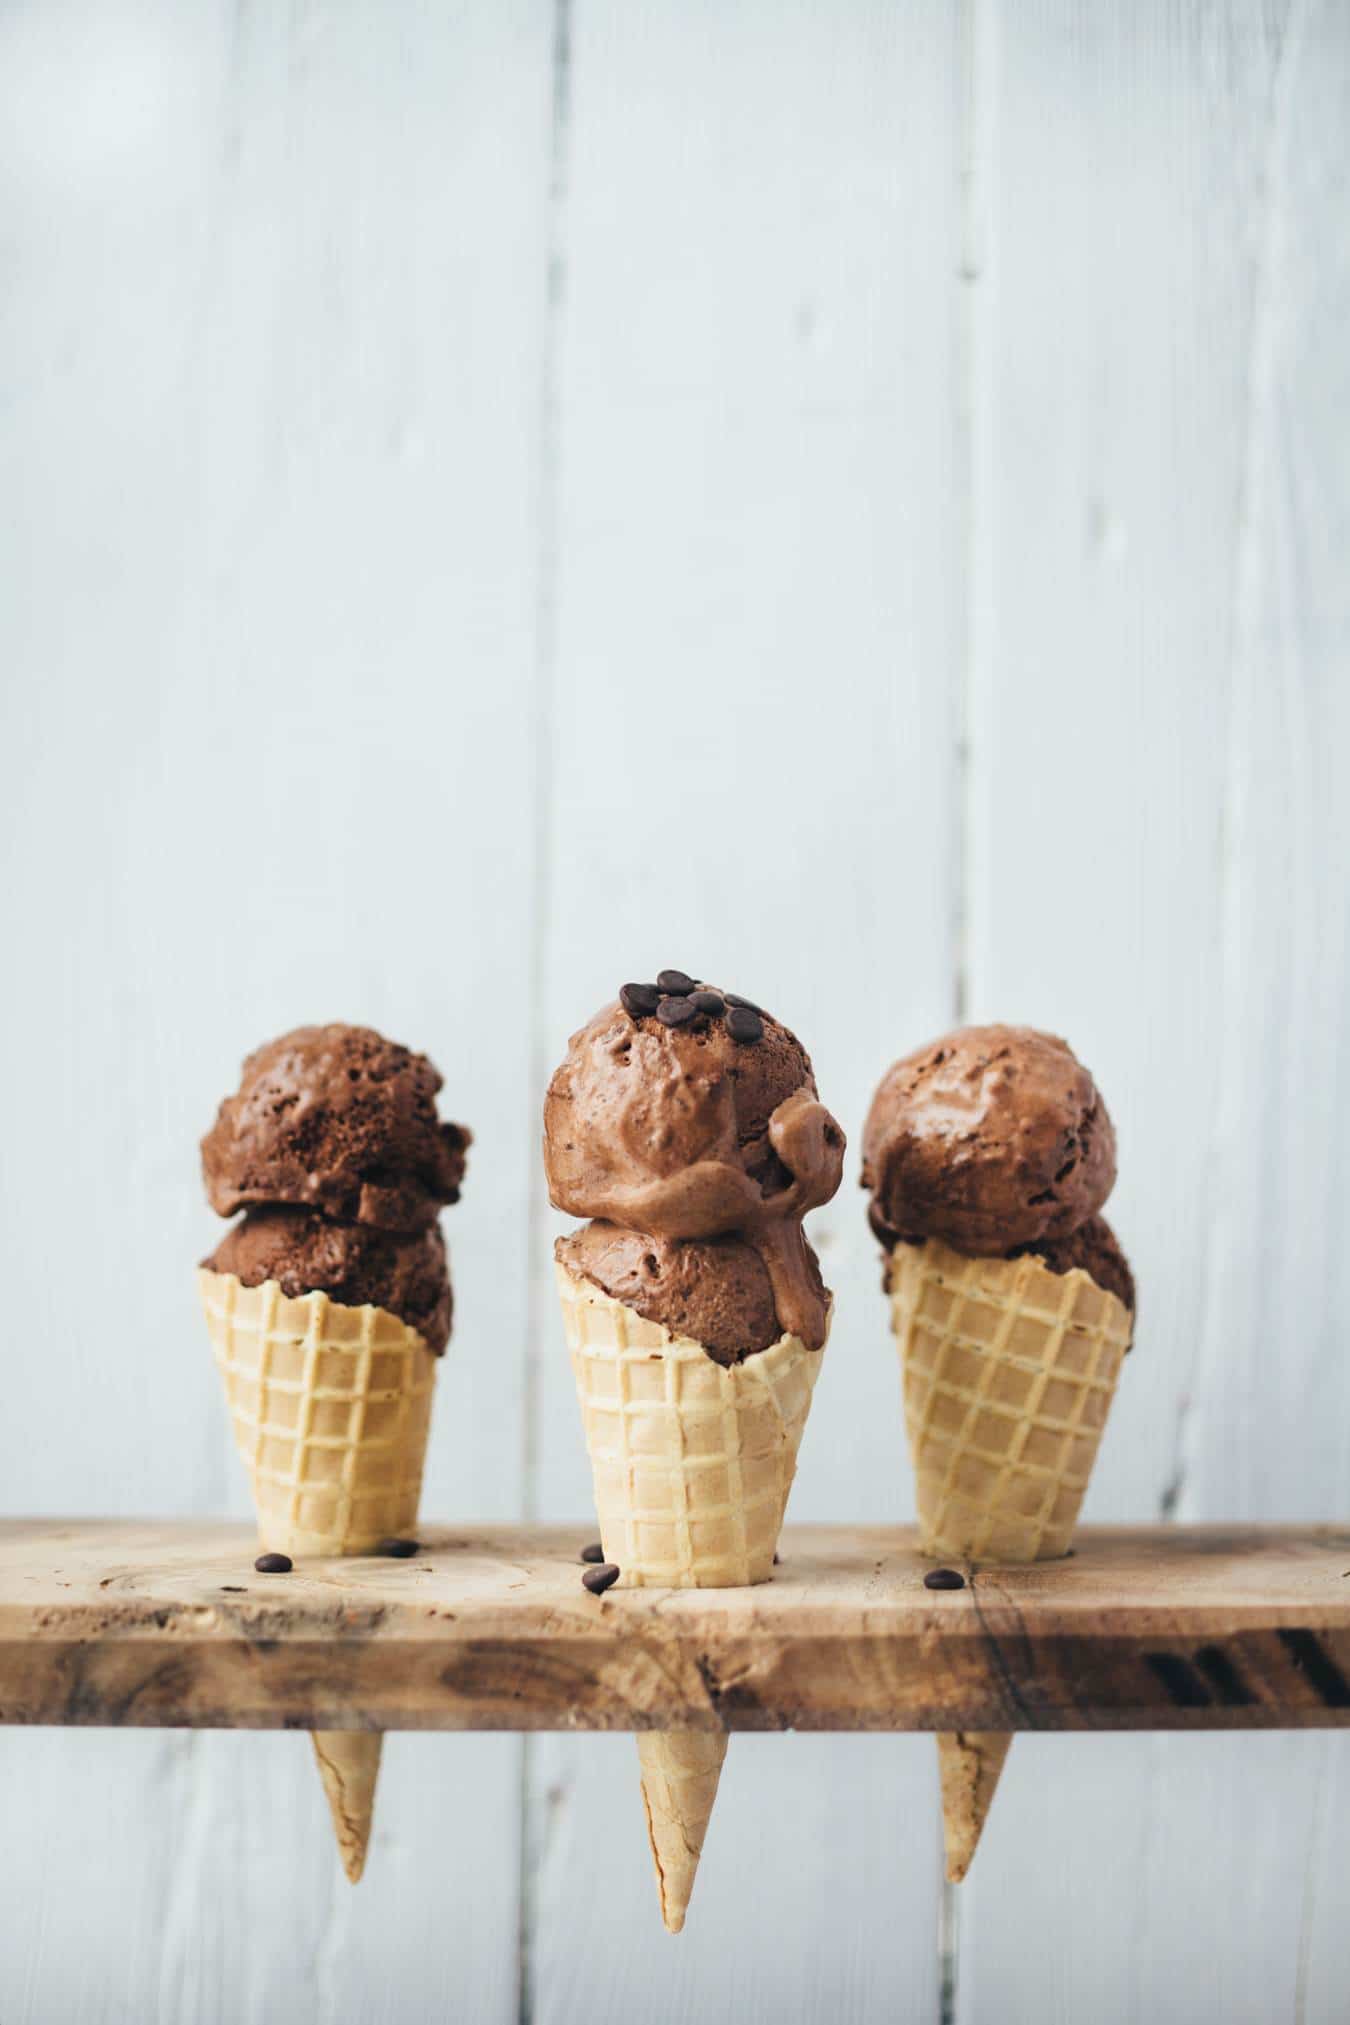 vegan aquafaba chocolate ice cream make yourself (without ice cream maker) recipe